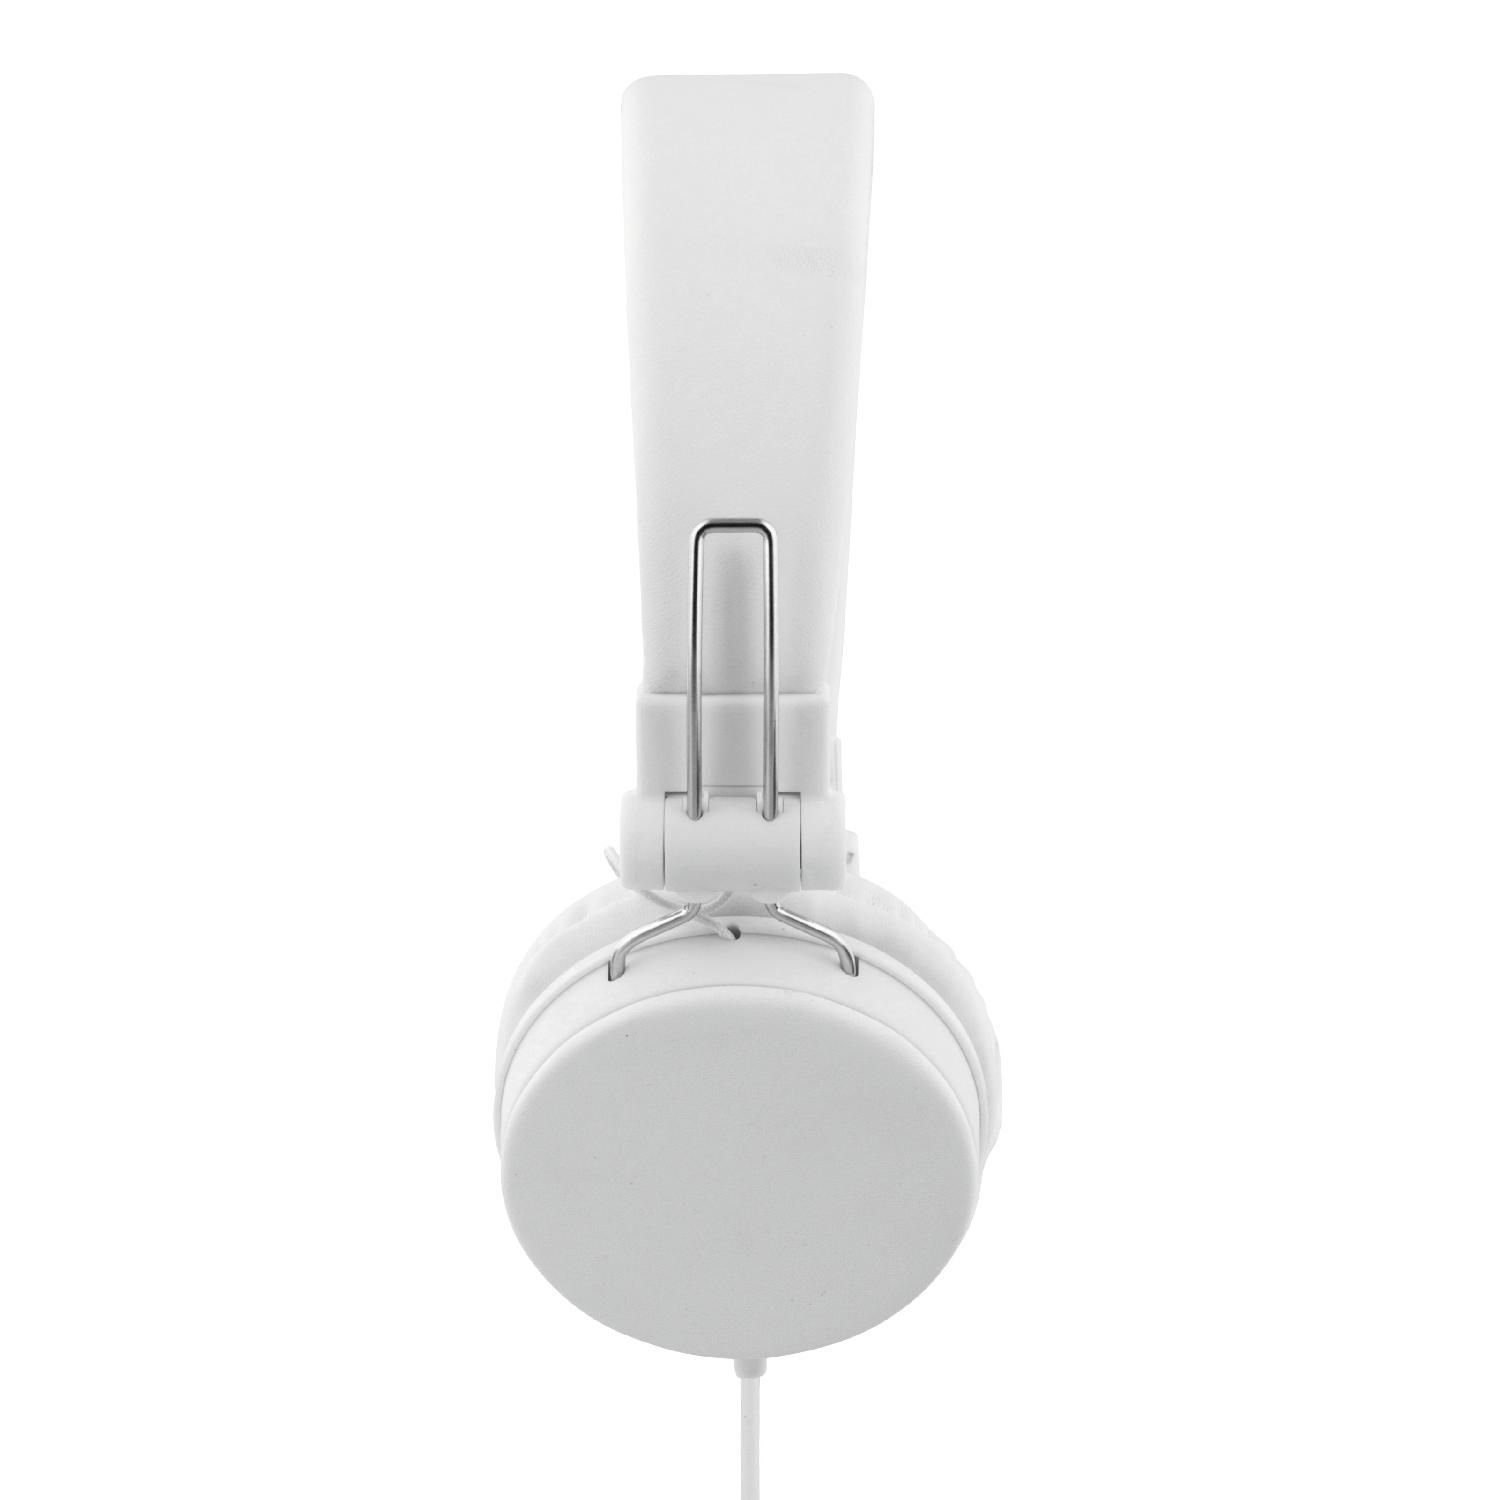 Jahre 5 1,2m weiß (integriertes Ohrpolster Kabel 3.5mm Mikrofon, Klinkenanschluss Herstellergarantie) On-Ear-Kopfhörer inkl. Kopfhörer Headset, faltbares STREETZ